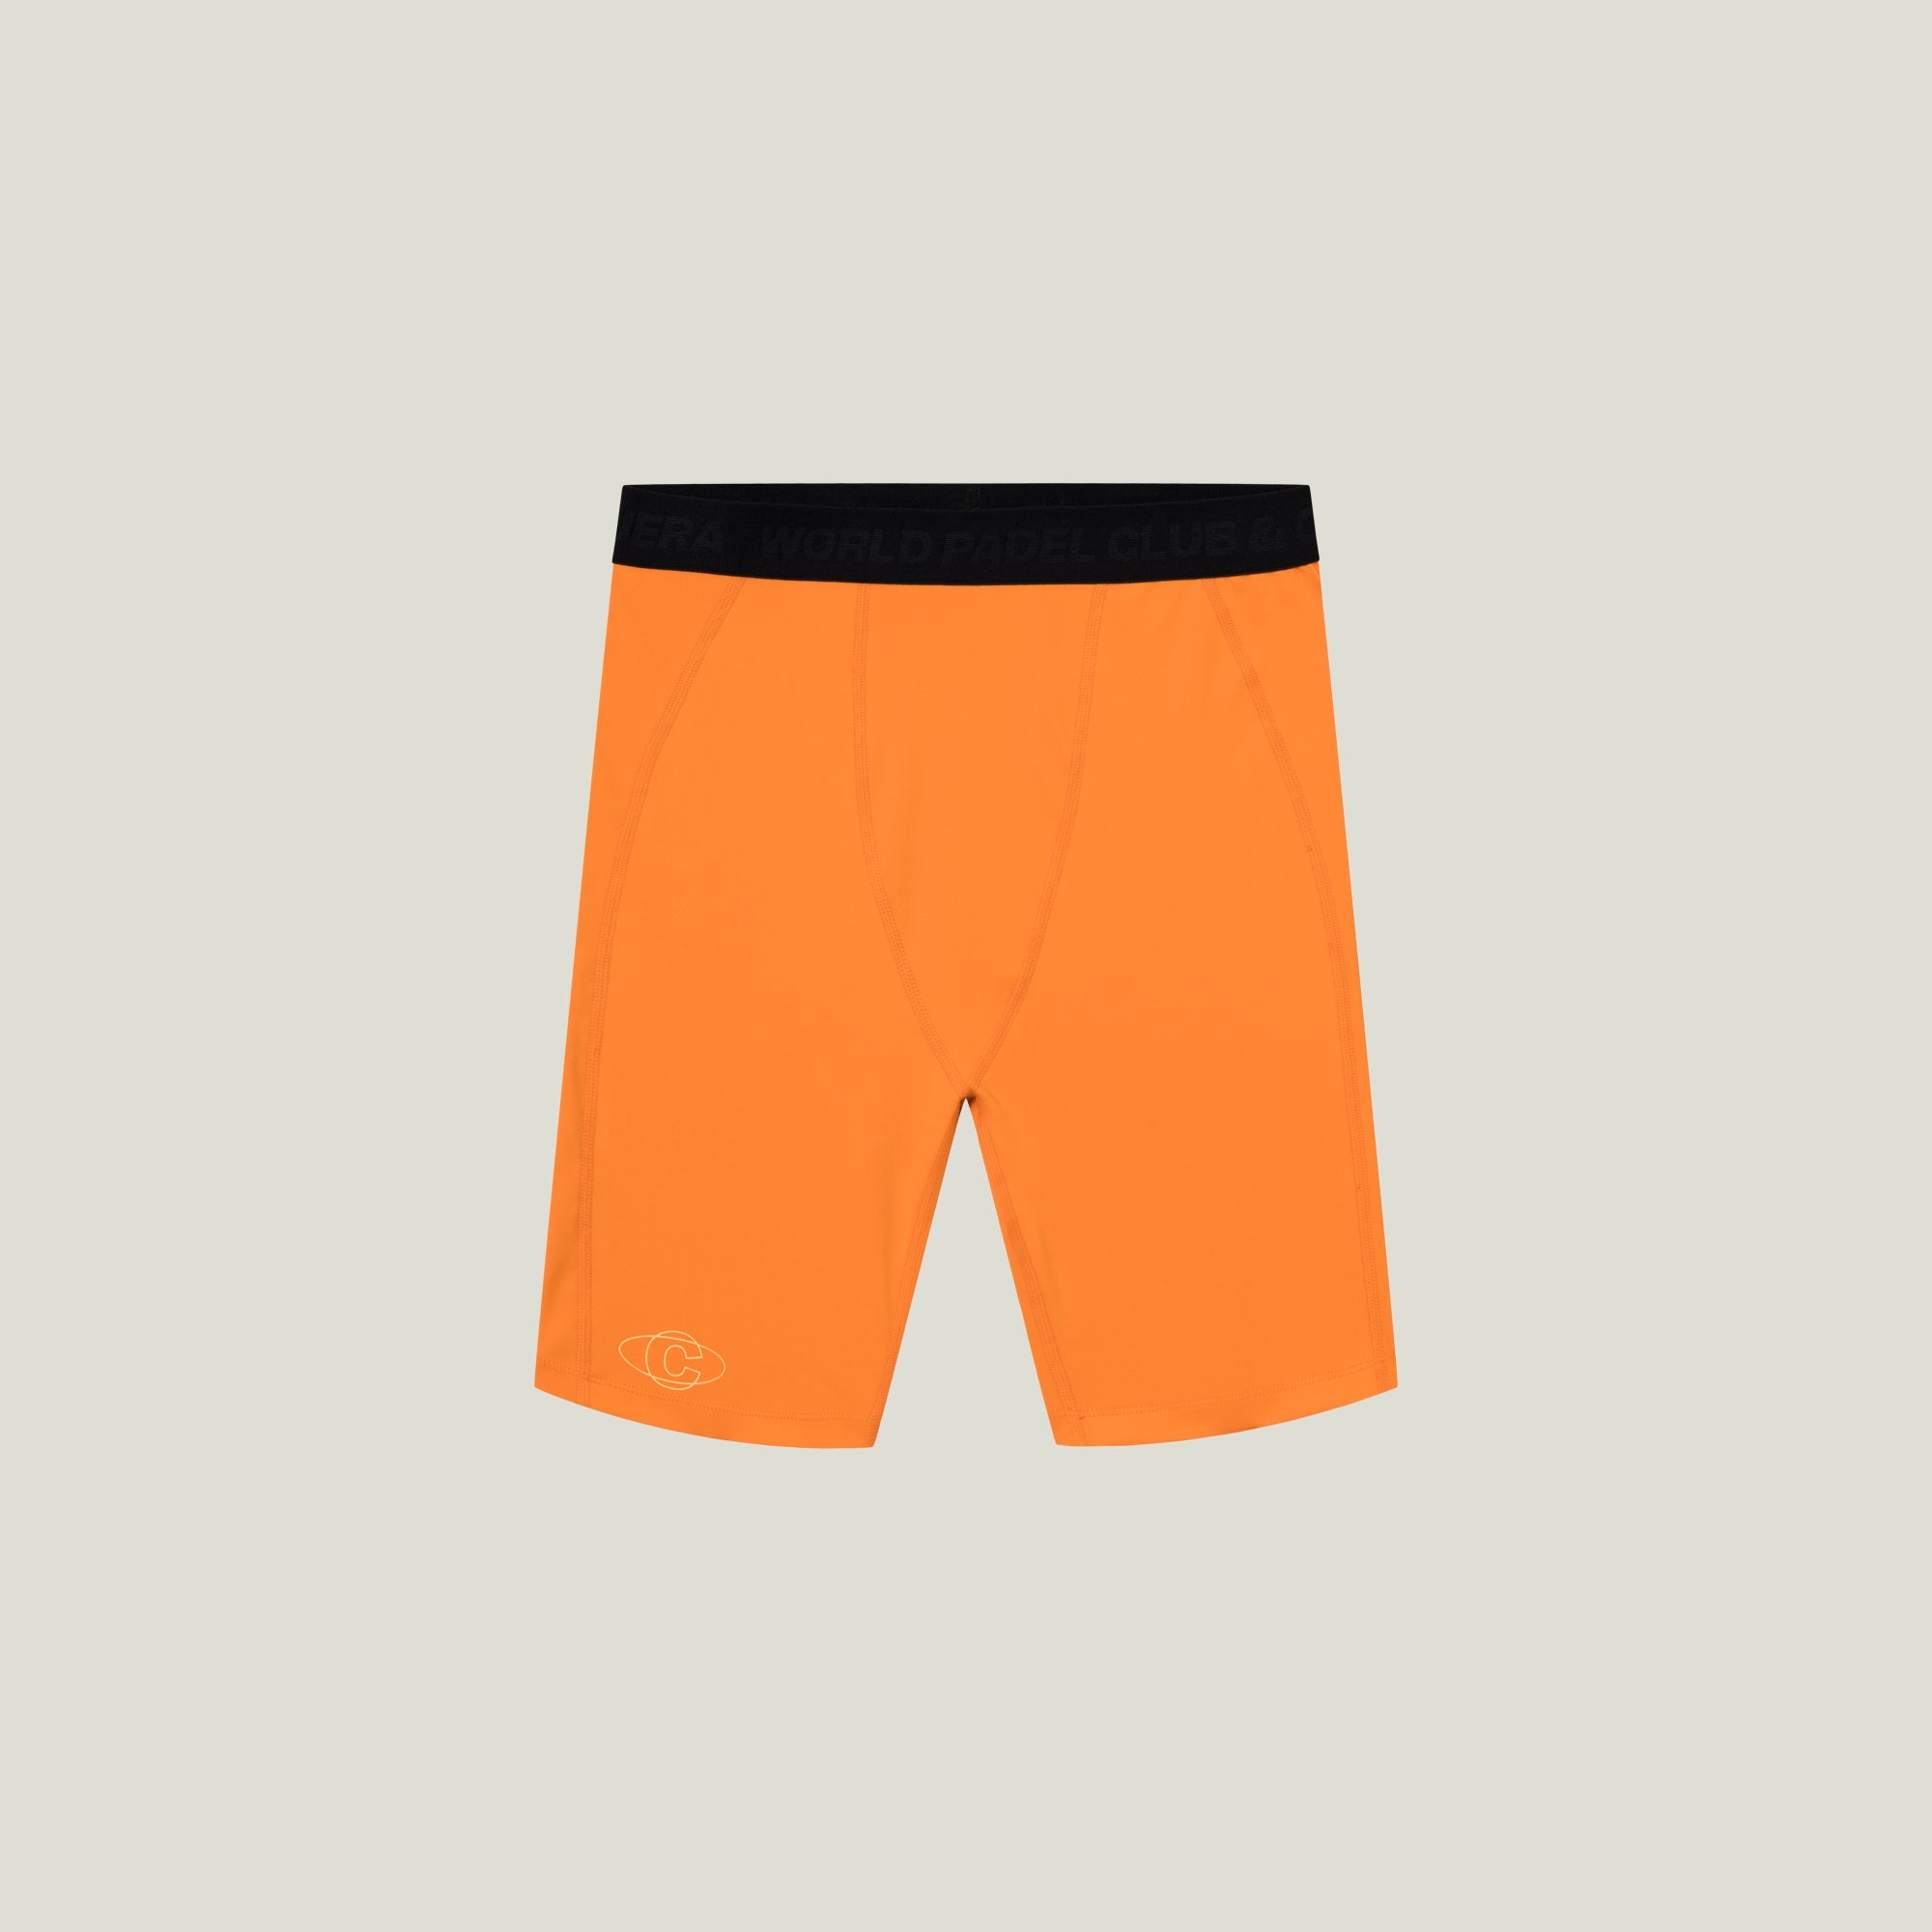 Se Cuera Oncourt Layer Tights (Orange) - L hos Padellife